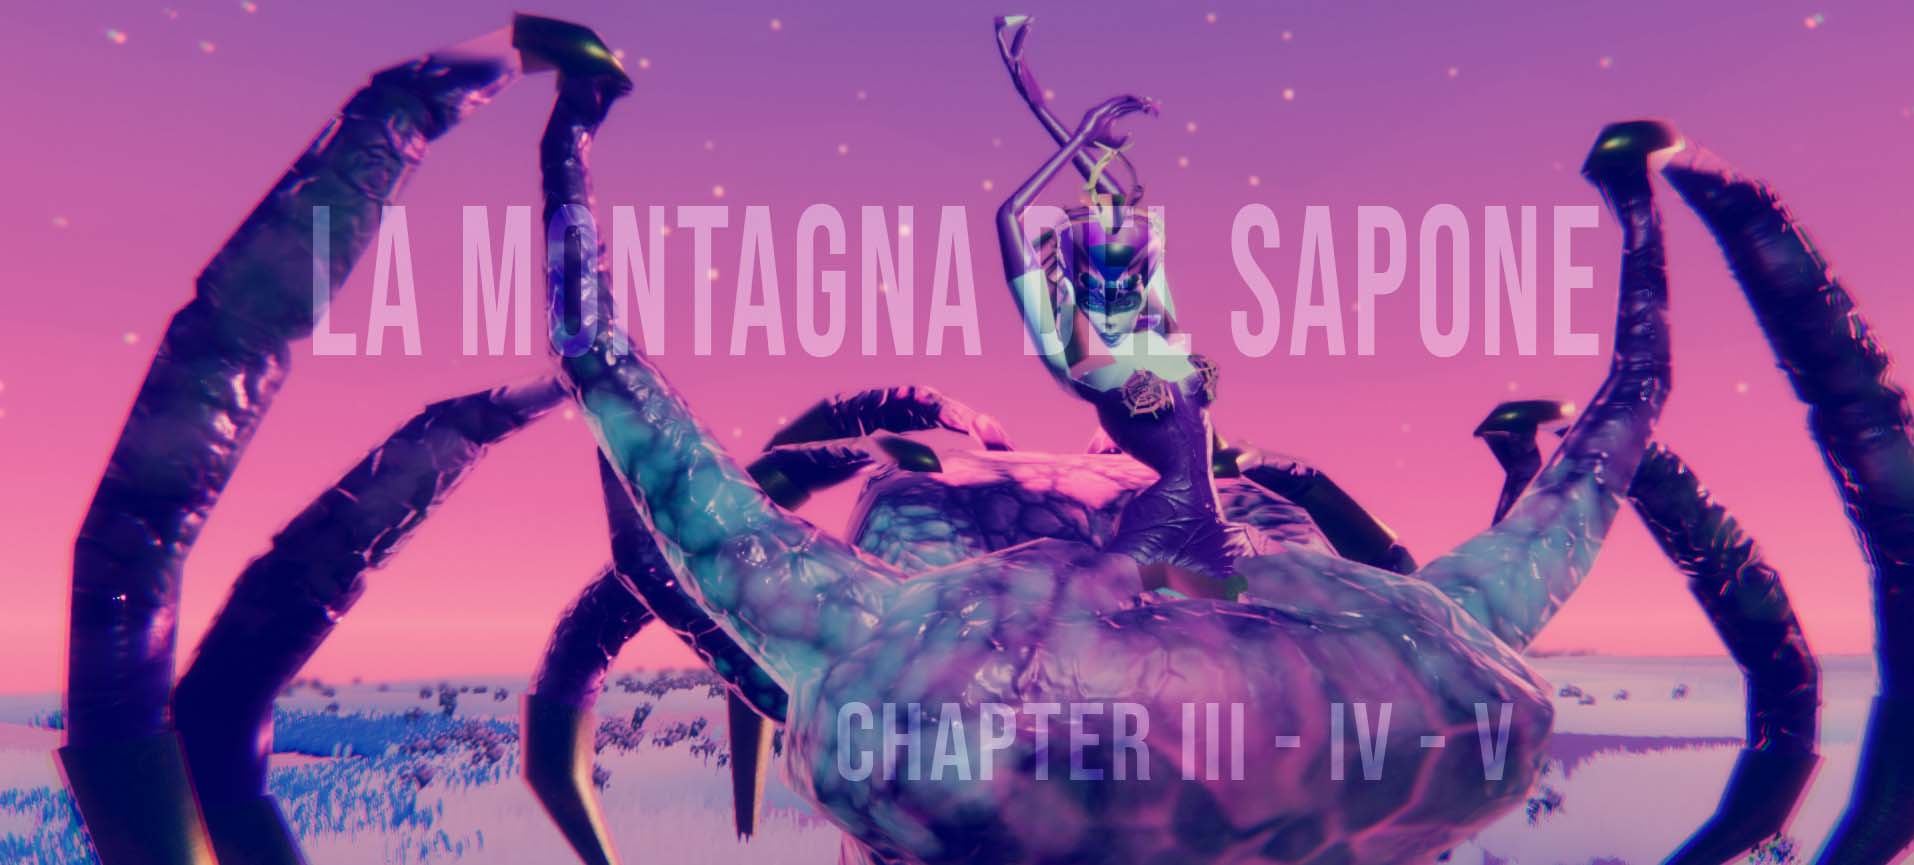 La Montagna Del Sapone - Chapter III - IV - V